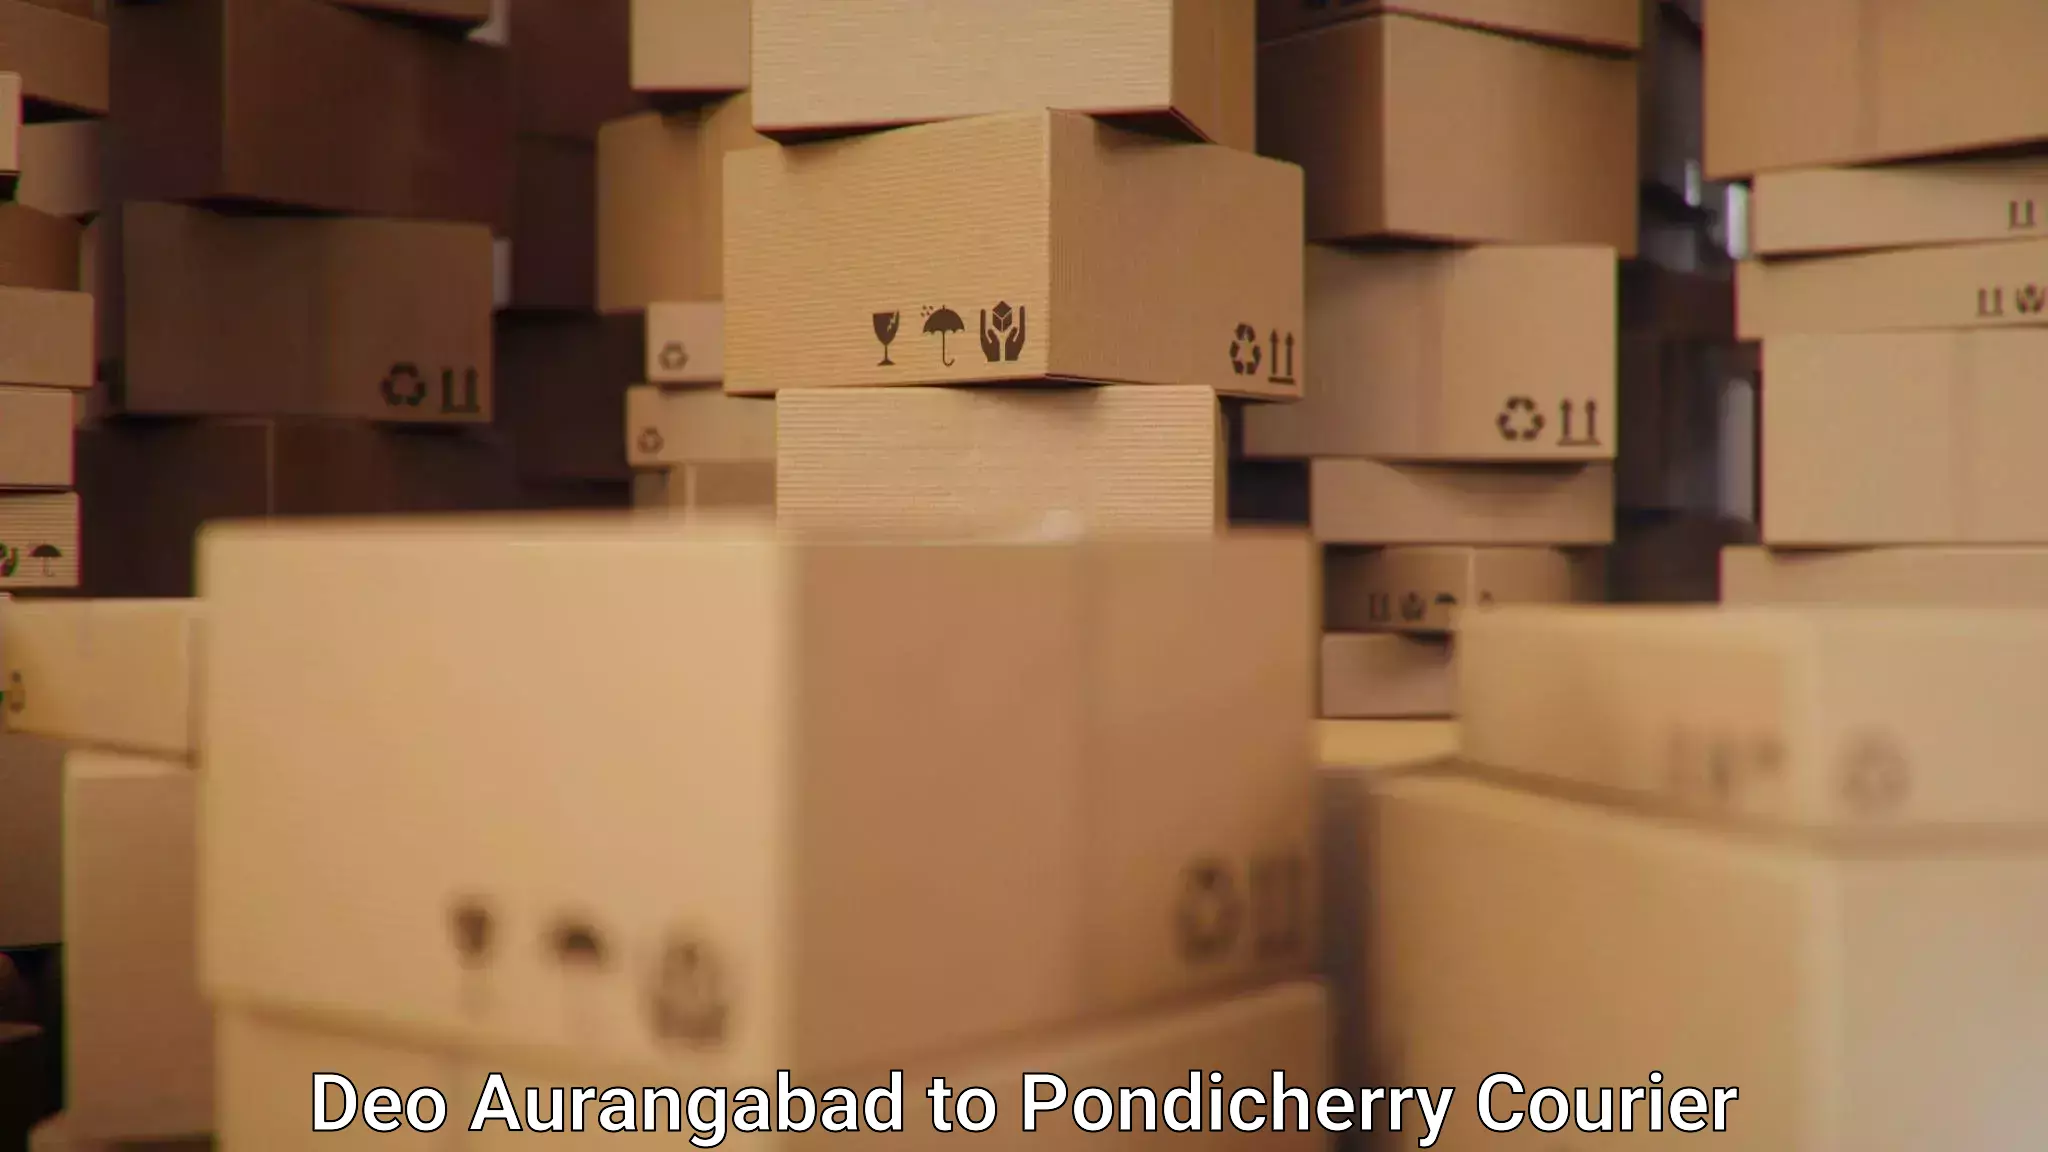 Courier service partnerships Deo Aurangabad to Metttupalayam